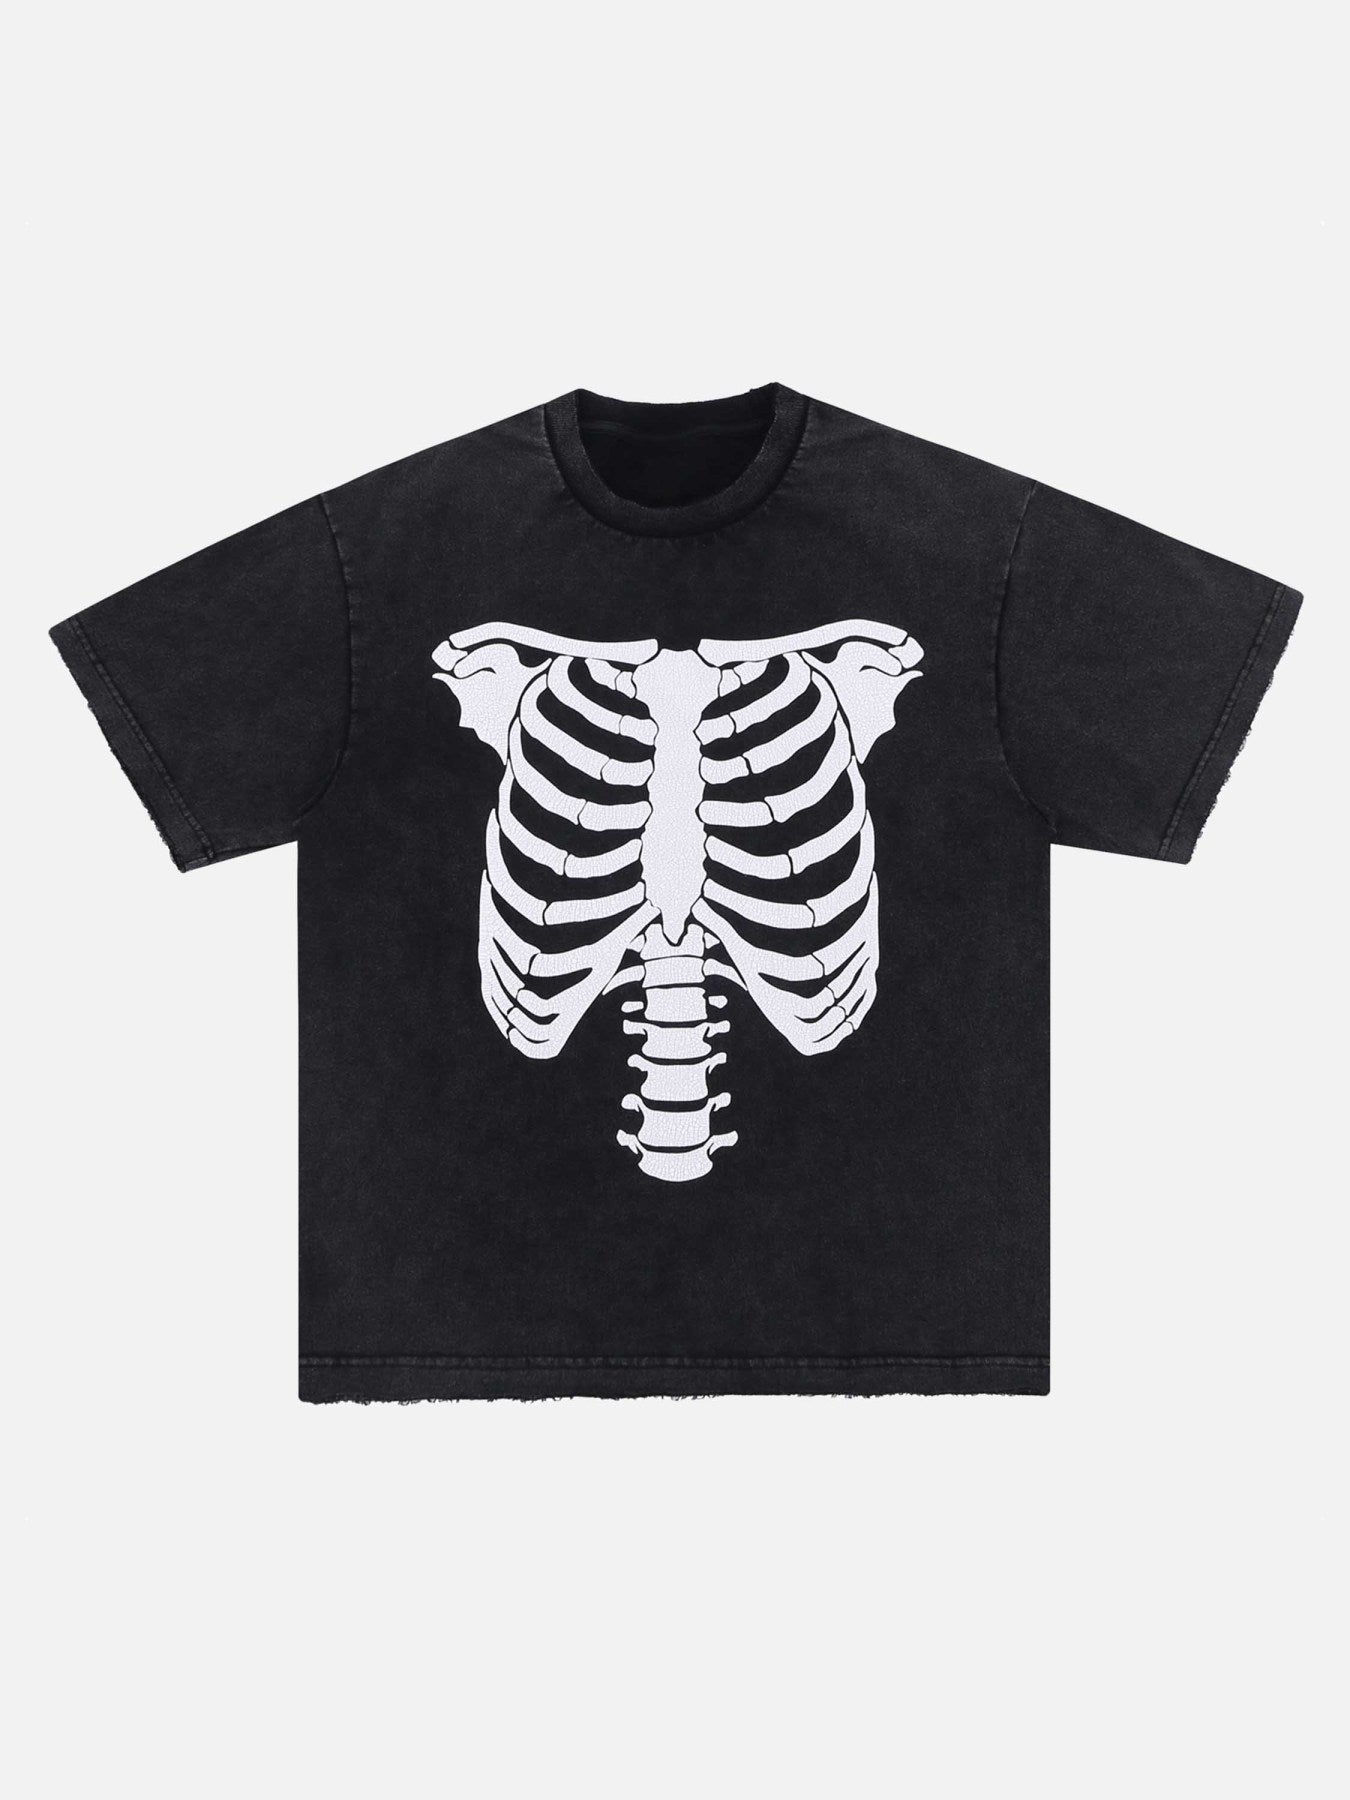 The Supermade Vintage Aged Skeleton Print T-Shirt